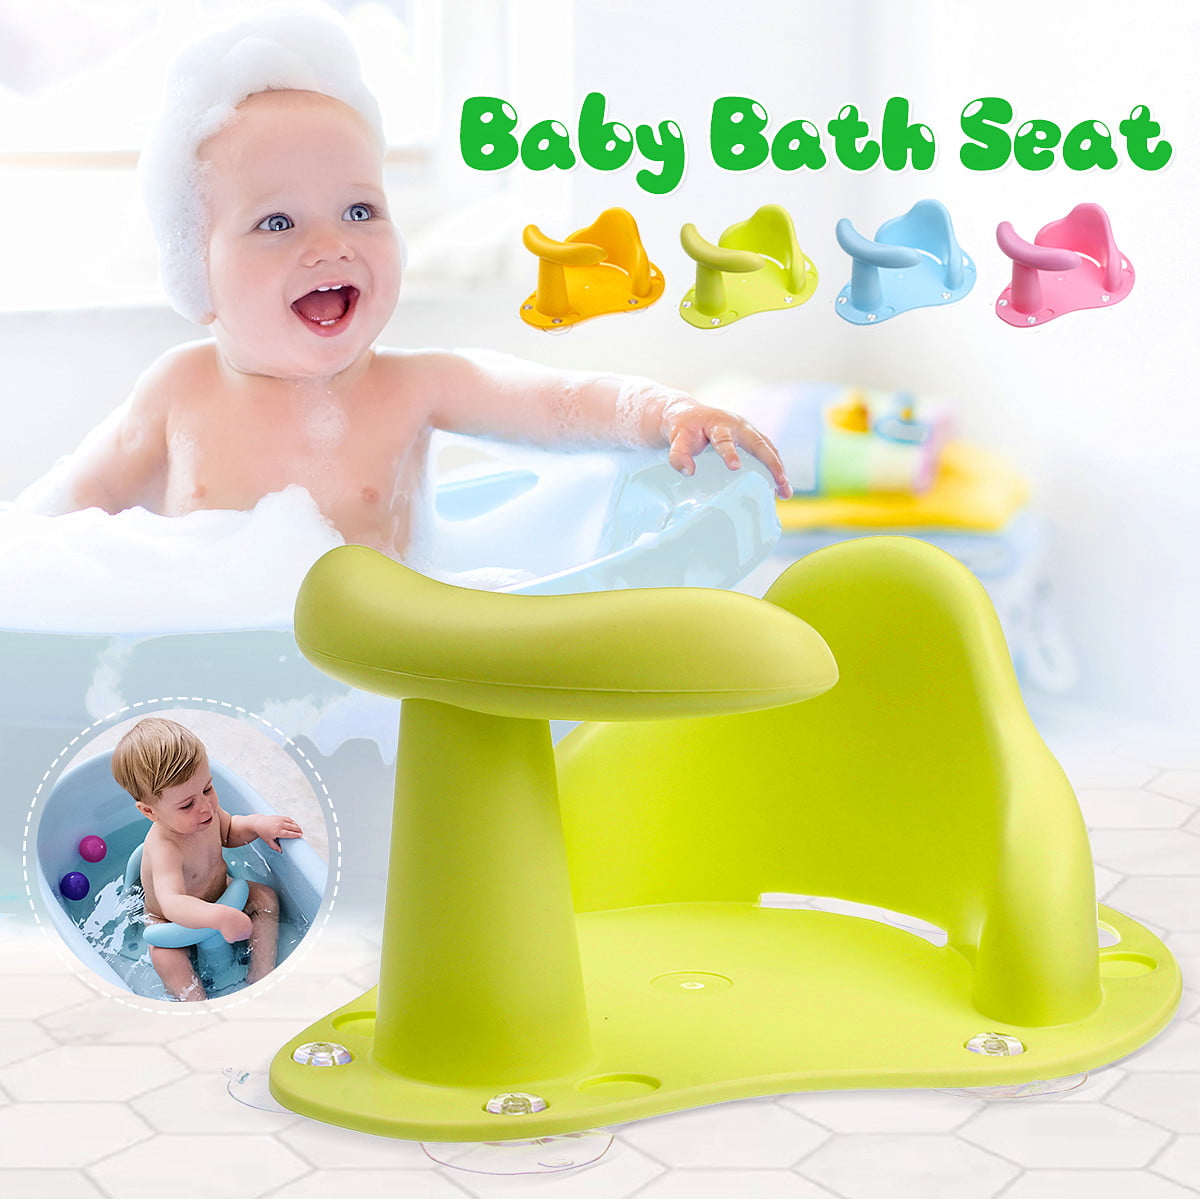 Baby Bath Chair Children Safety Seat Infant Toddler Shower Bath Tub Seat Yellow Green Blue Pink Walmartcom Walmartcom